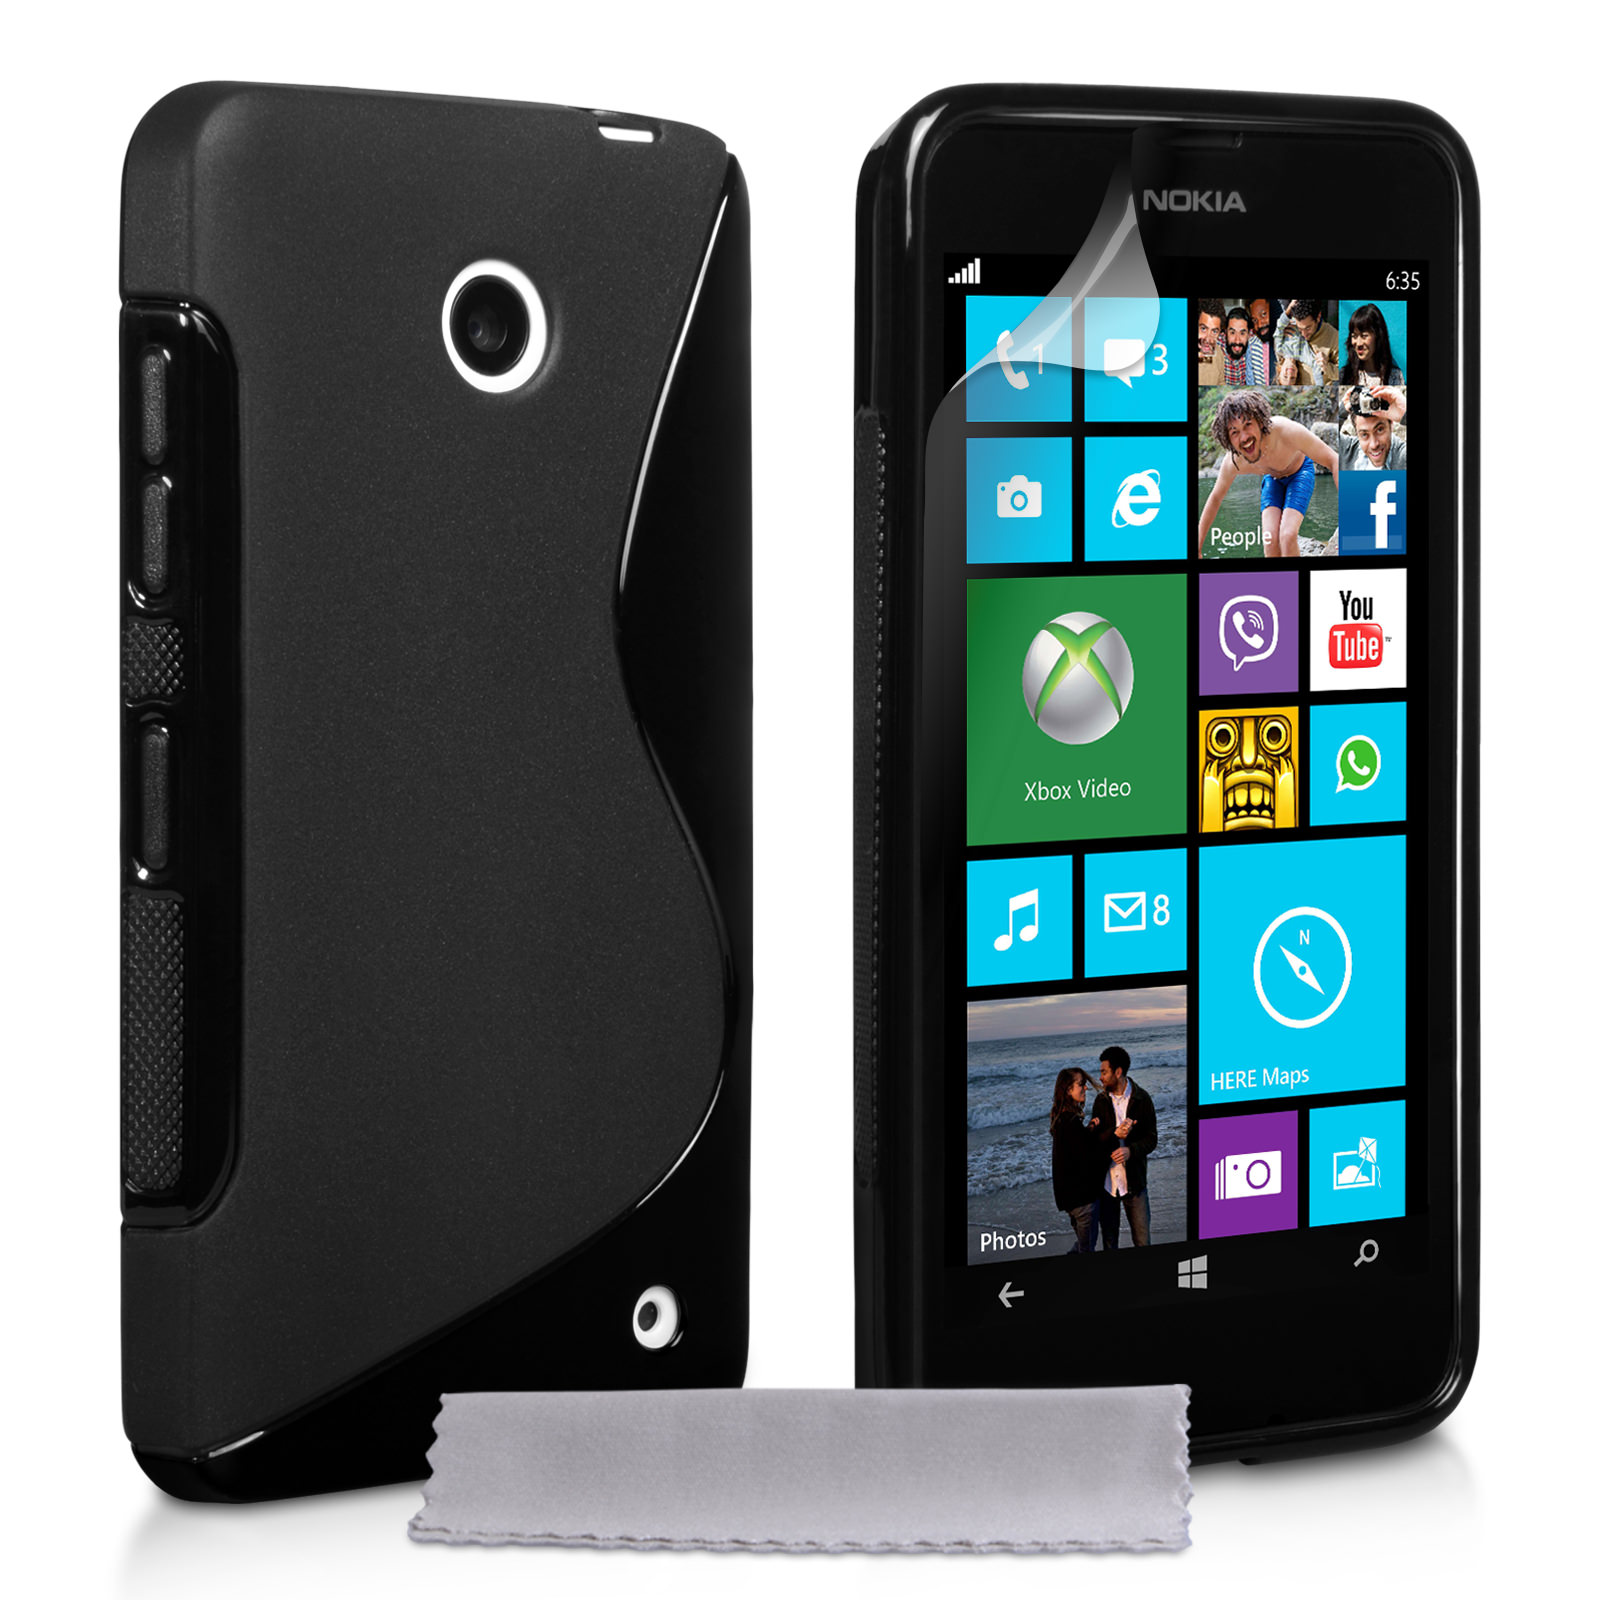 Caseflex Nokia Lumia 630 Silicone Gel S-Line Case - Black